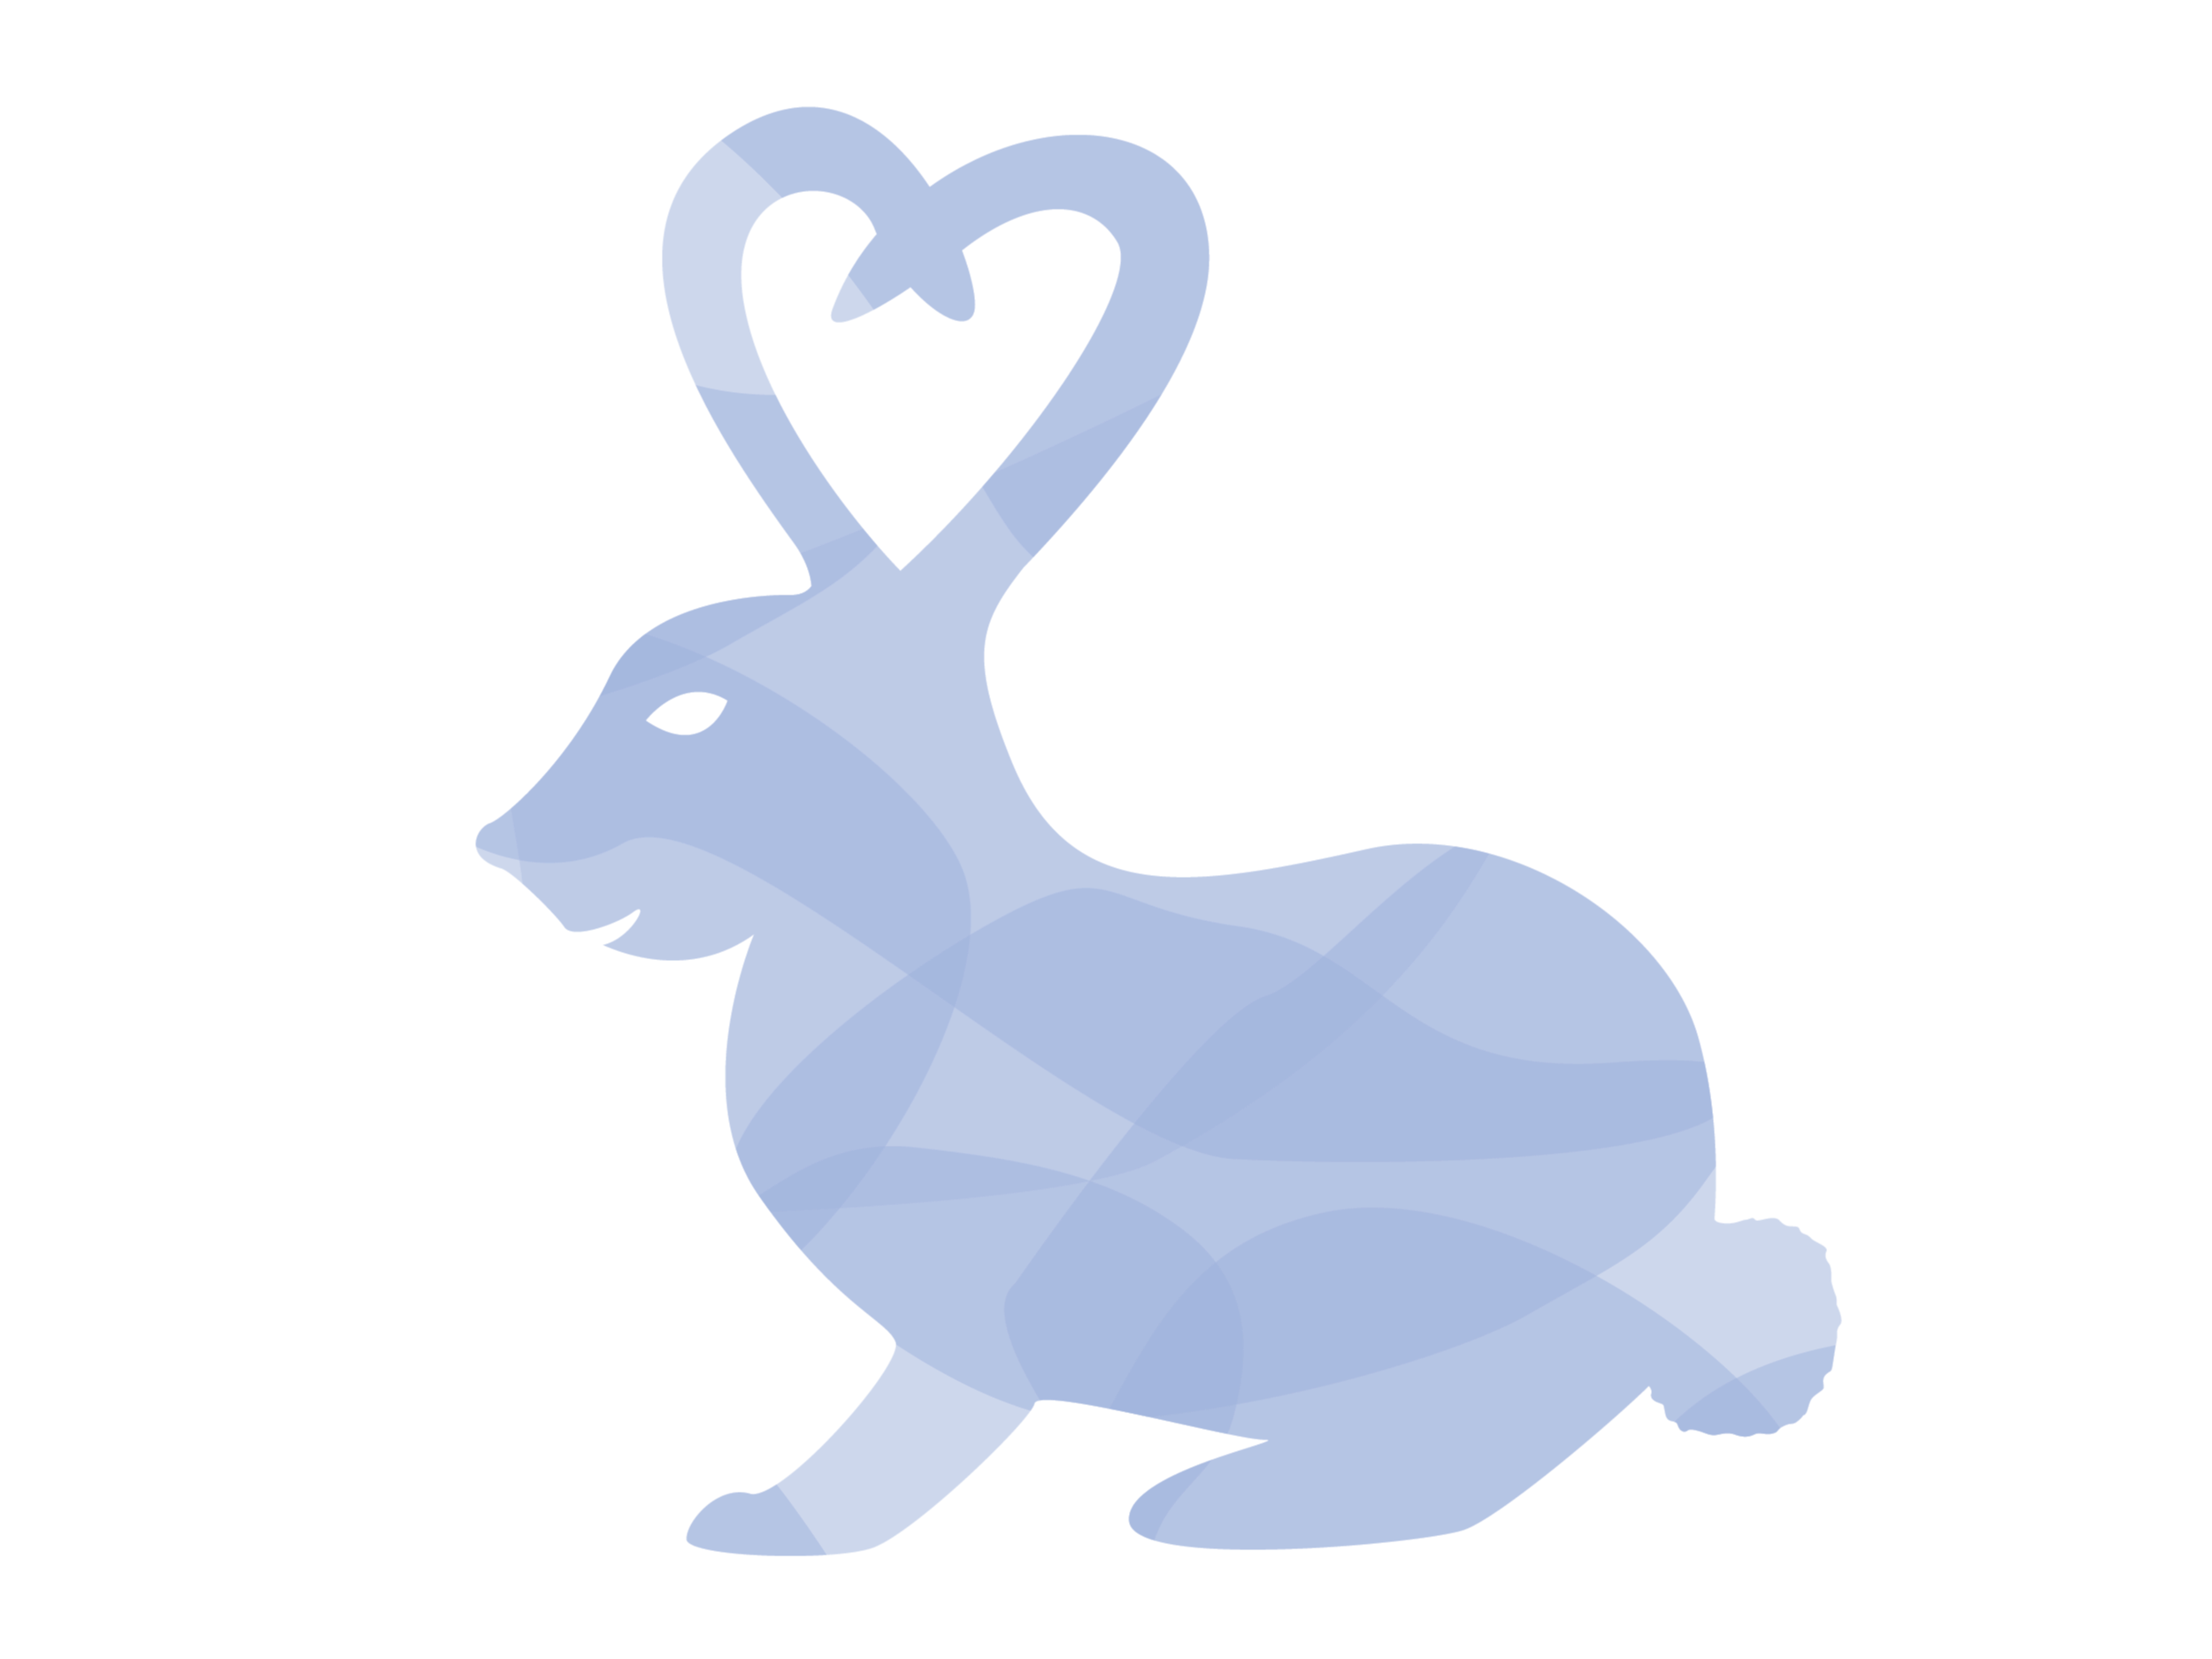 Blue rabbit illustration